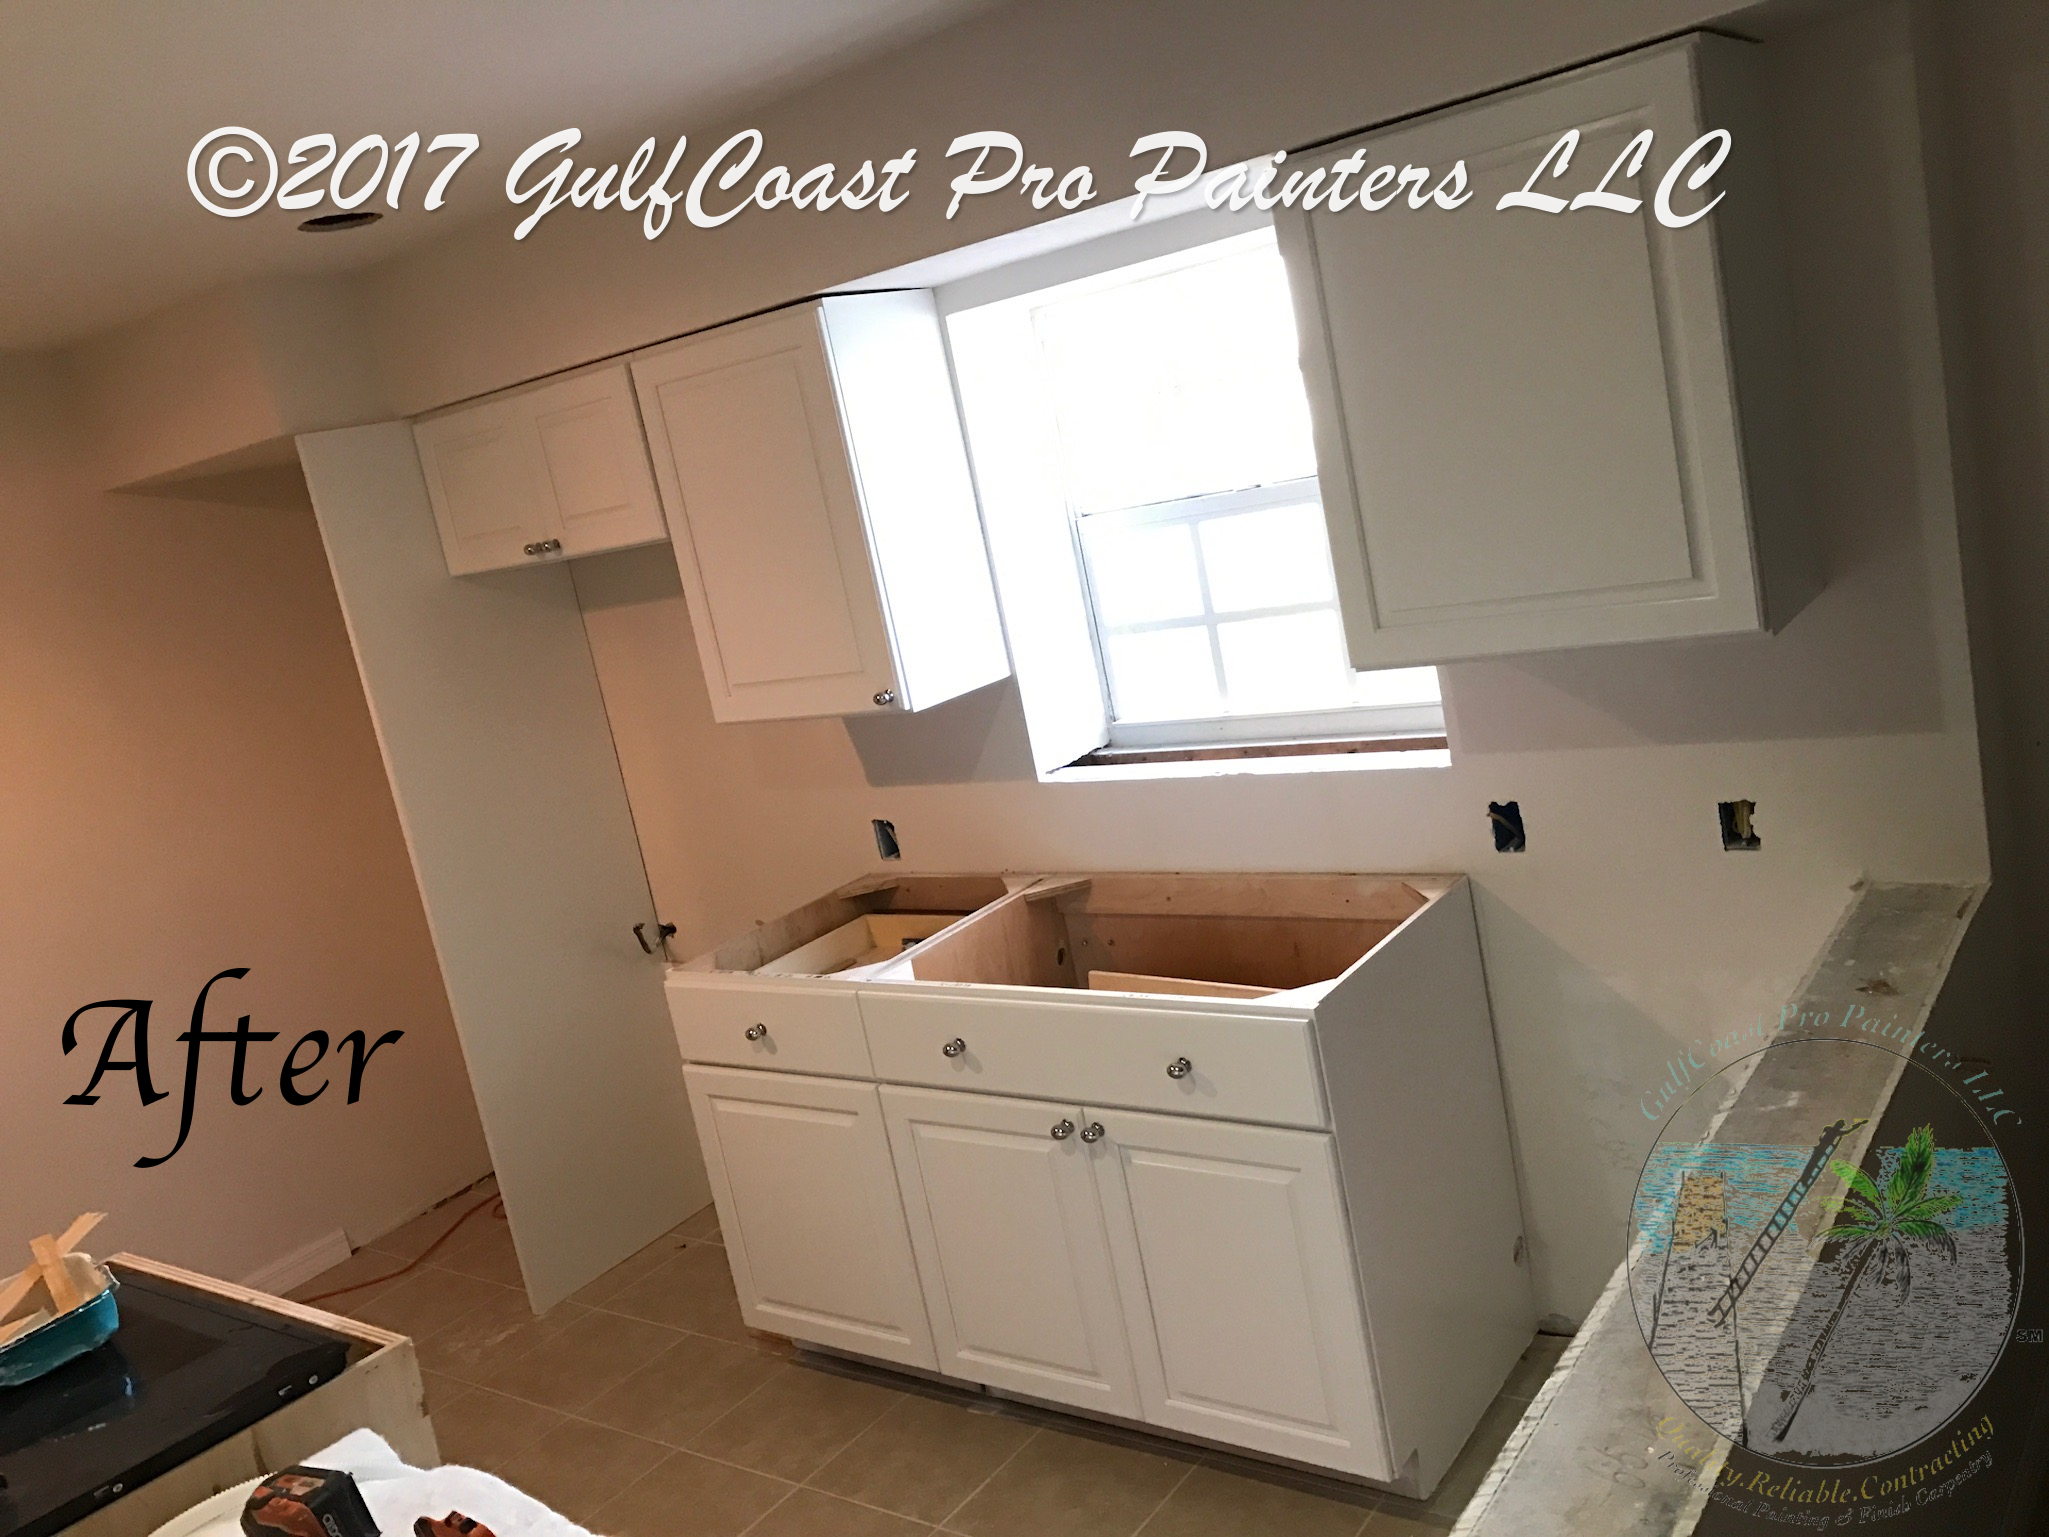 White Kitchen Cabinet Refinishing March 2017 Watermarked1 (1).jpg